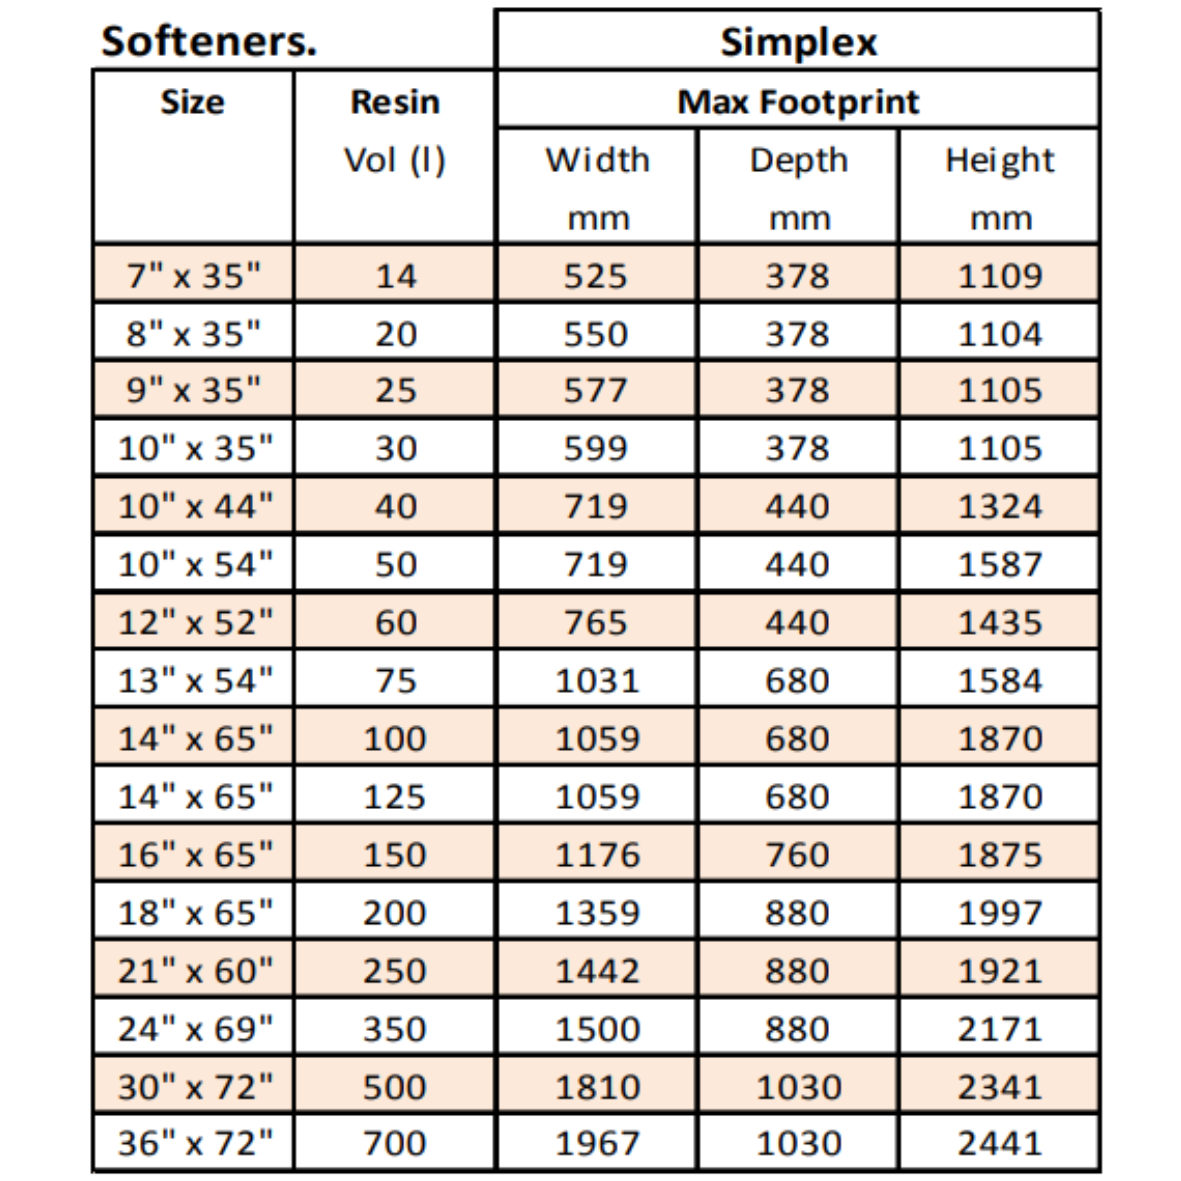 7" x 35", 14L, Simplex Water Softener, Autotrol 255 Time Controller, 0.56m³/hr